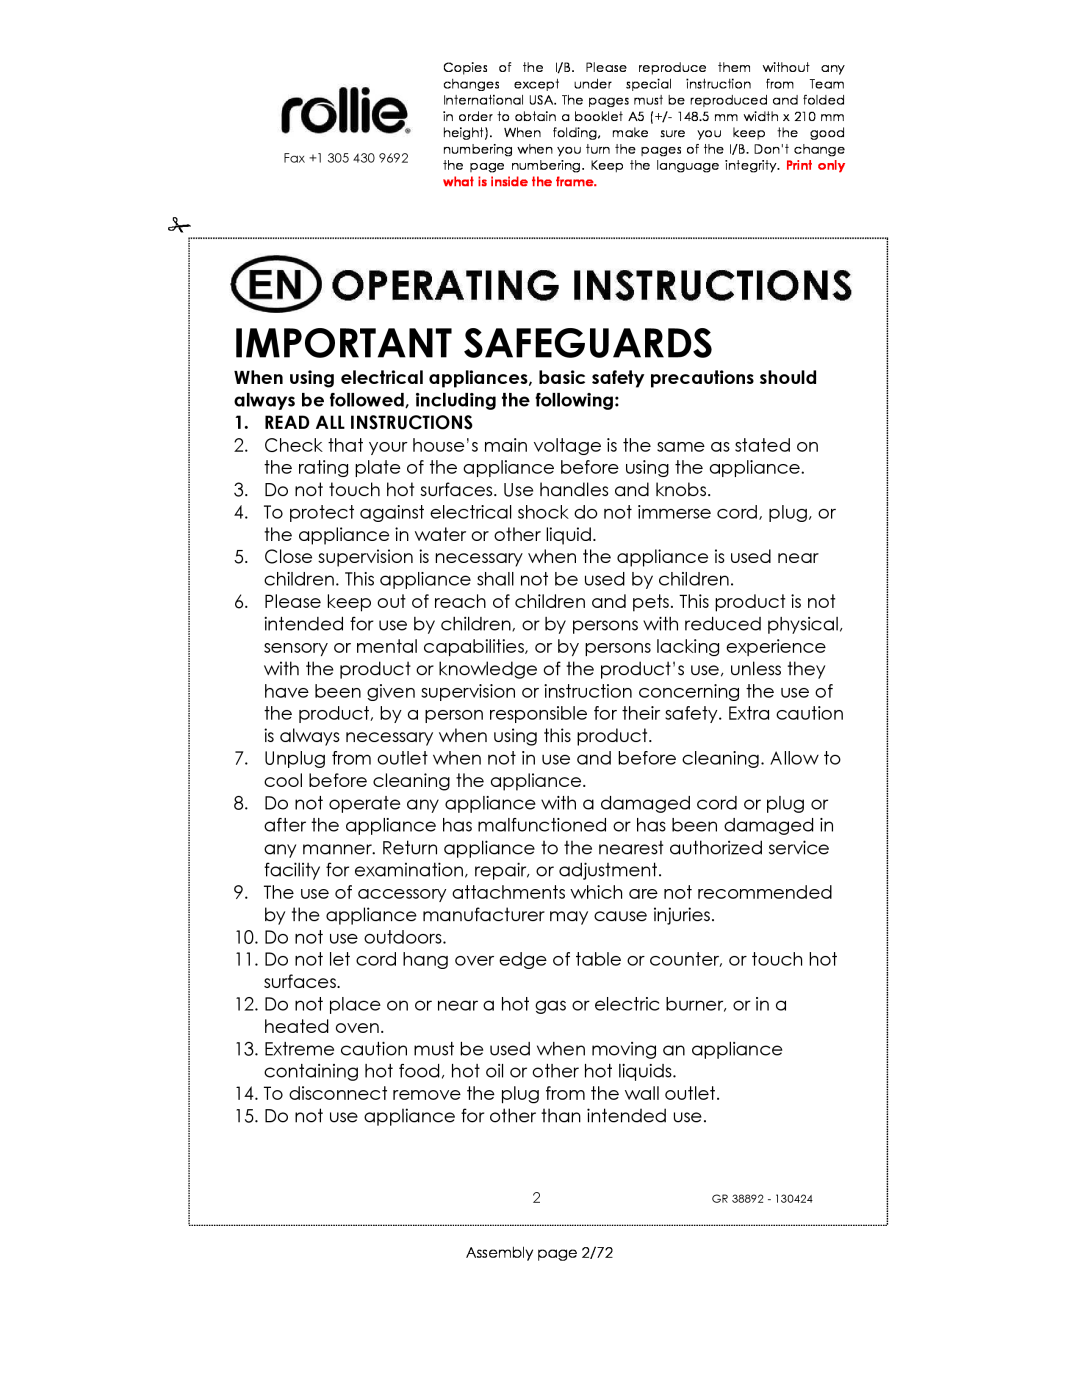 Kalorik GR38892 manual Important Safeguards, Read All Instructions 